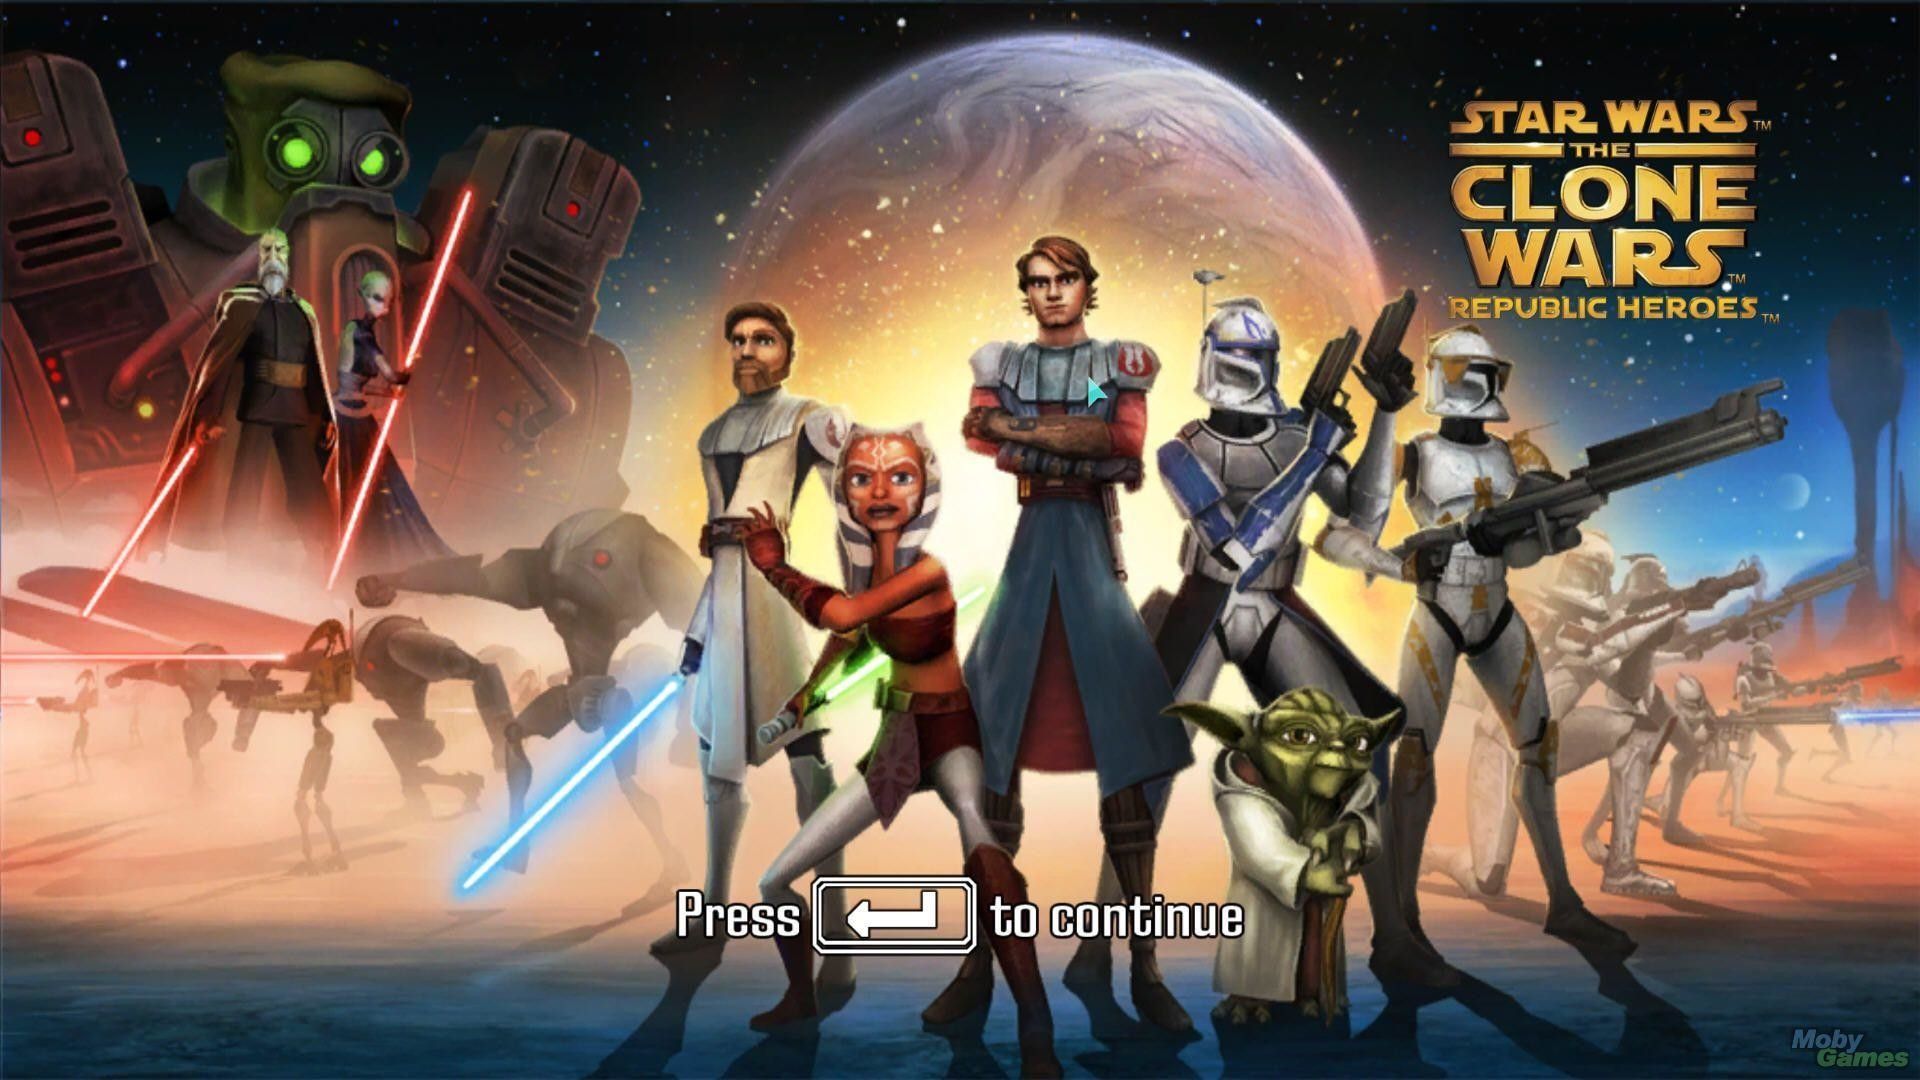 Star Wars Clone Wars Season 7 Wallpapers